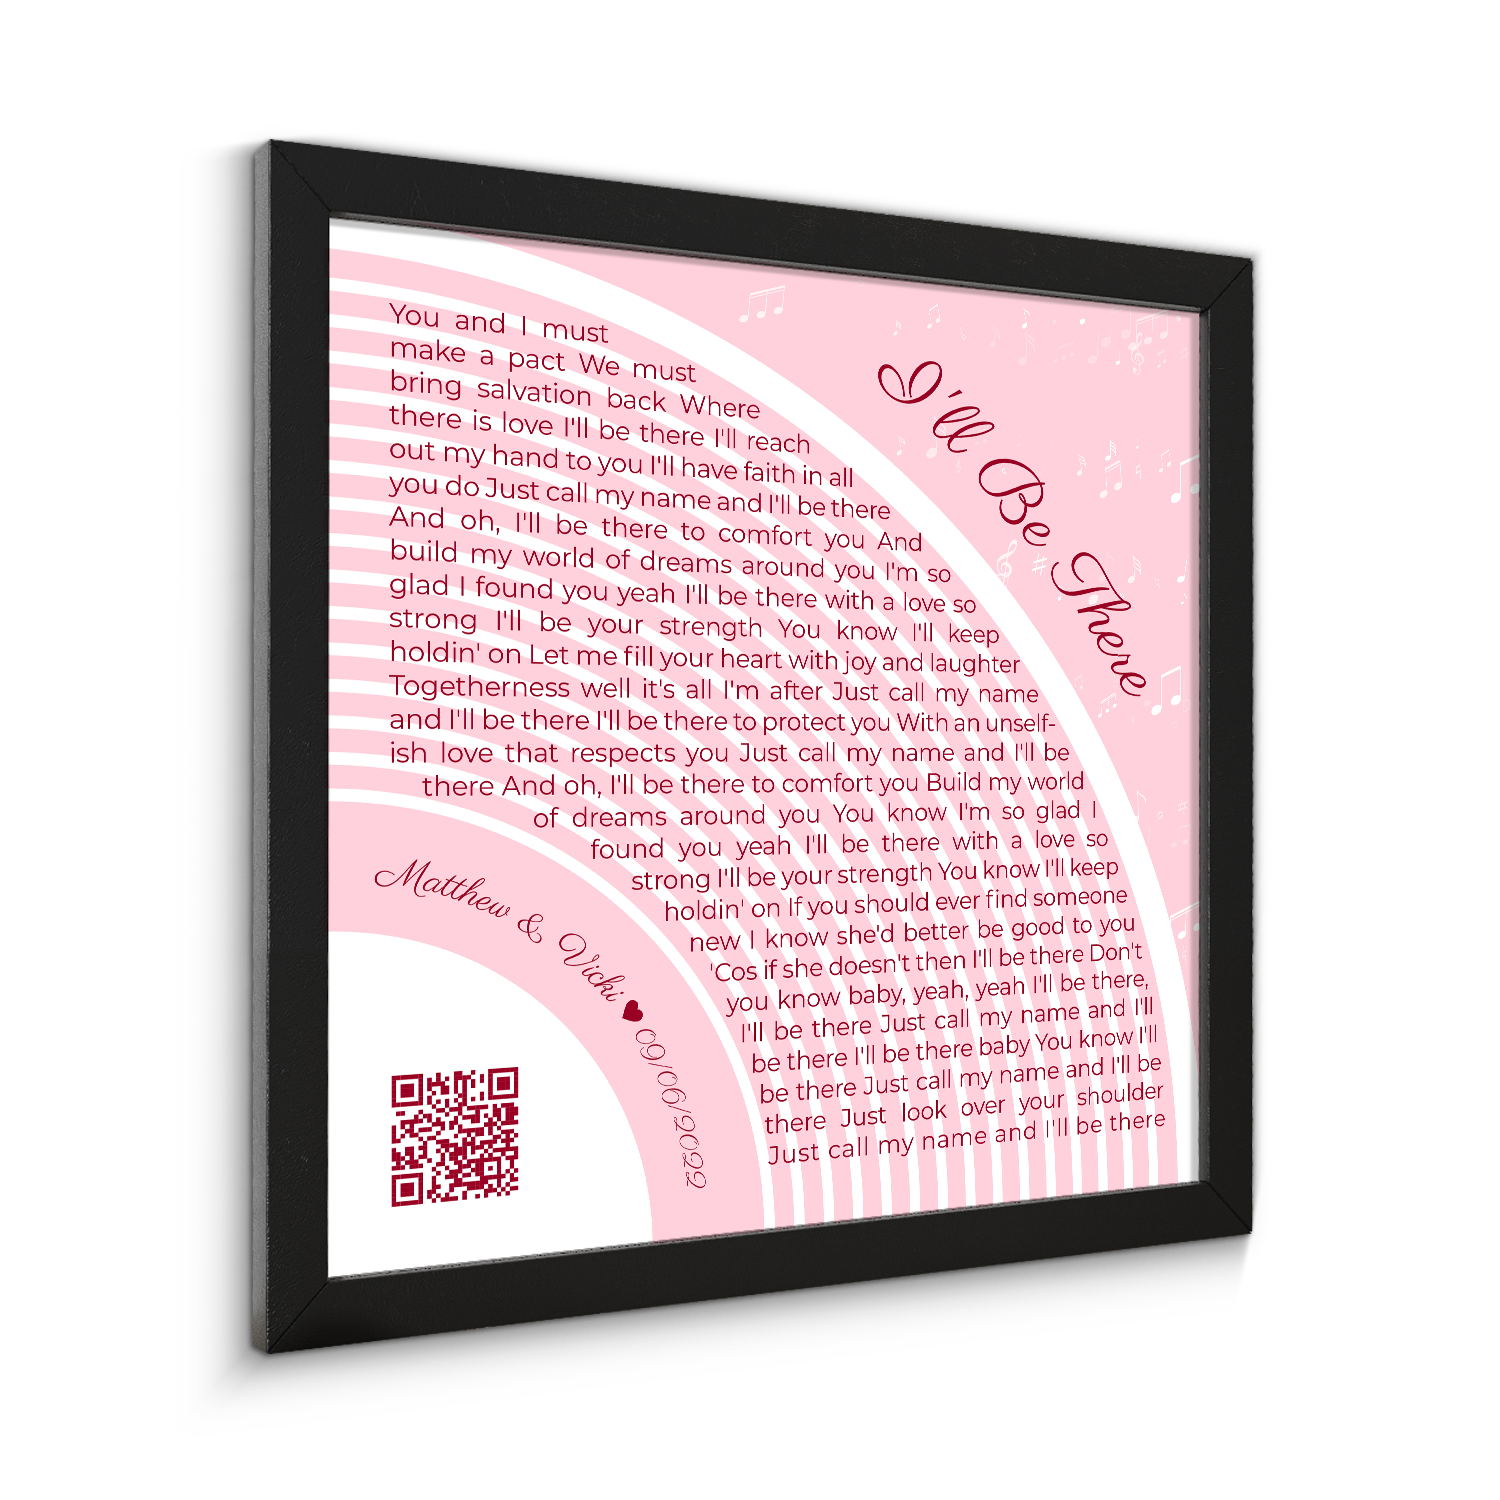 Custom Song Lyrics Wall Art With QR Code, Pastel Pink Framed Art Print